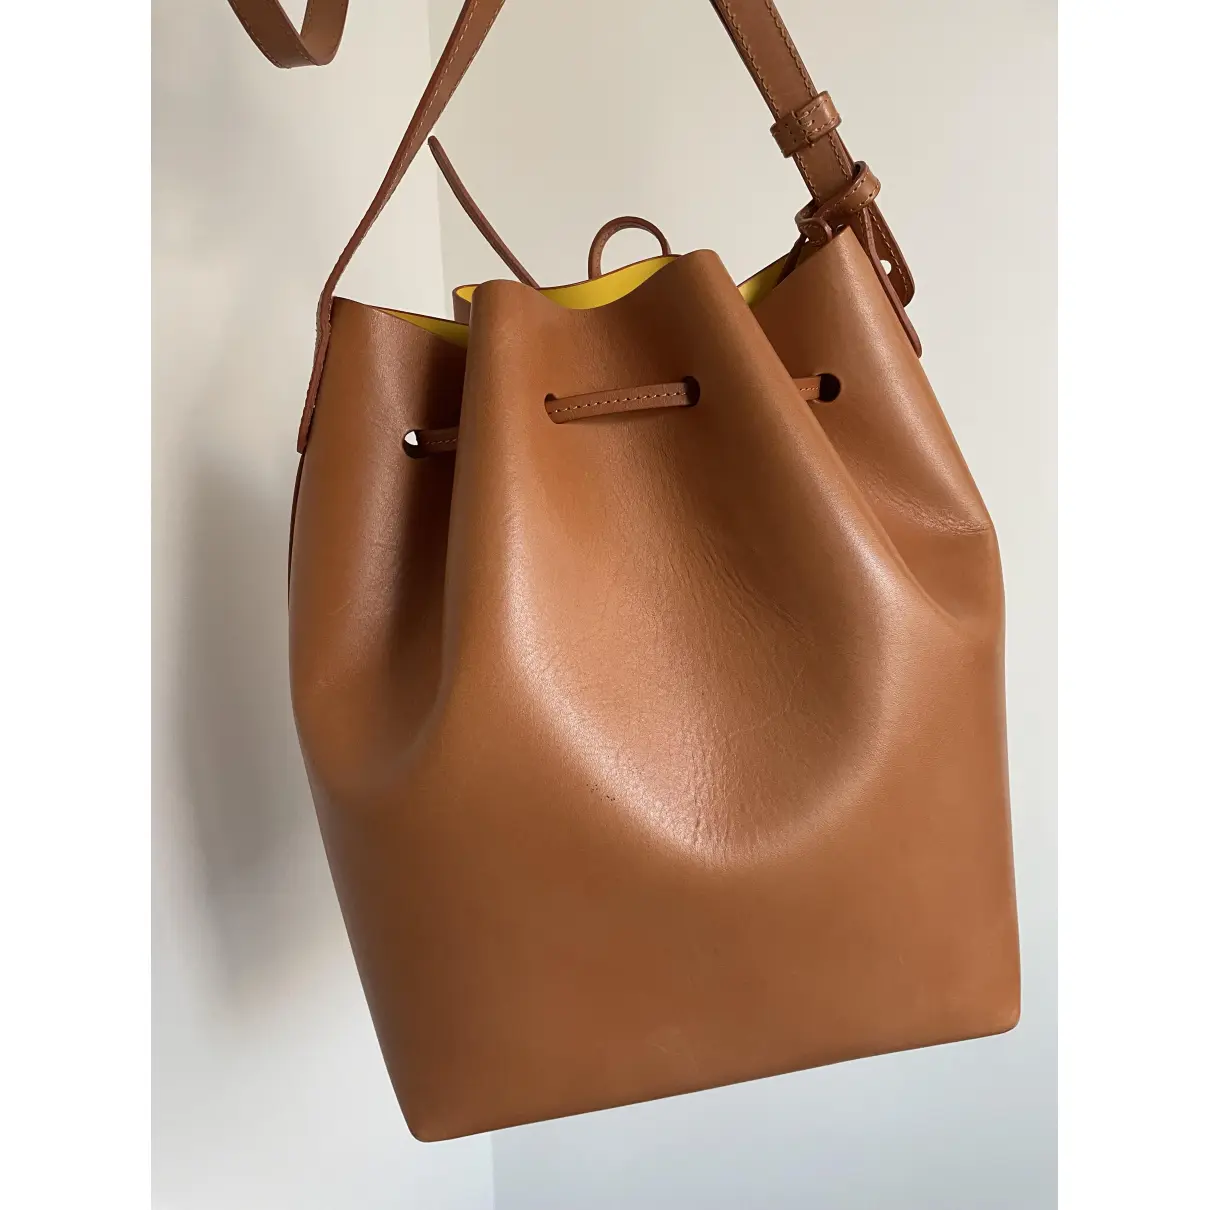 Buy Mansur Gavriel Bucket leather bag online